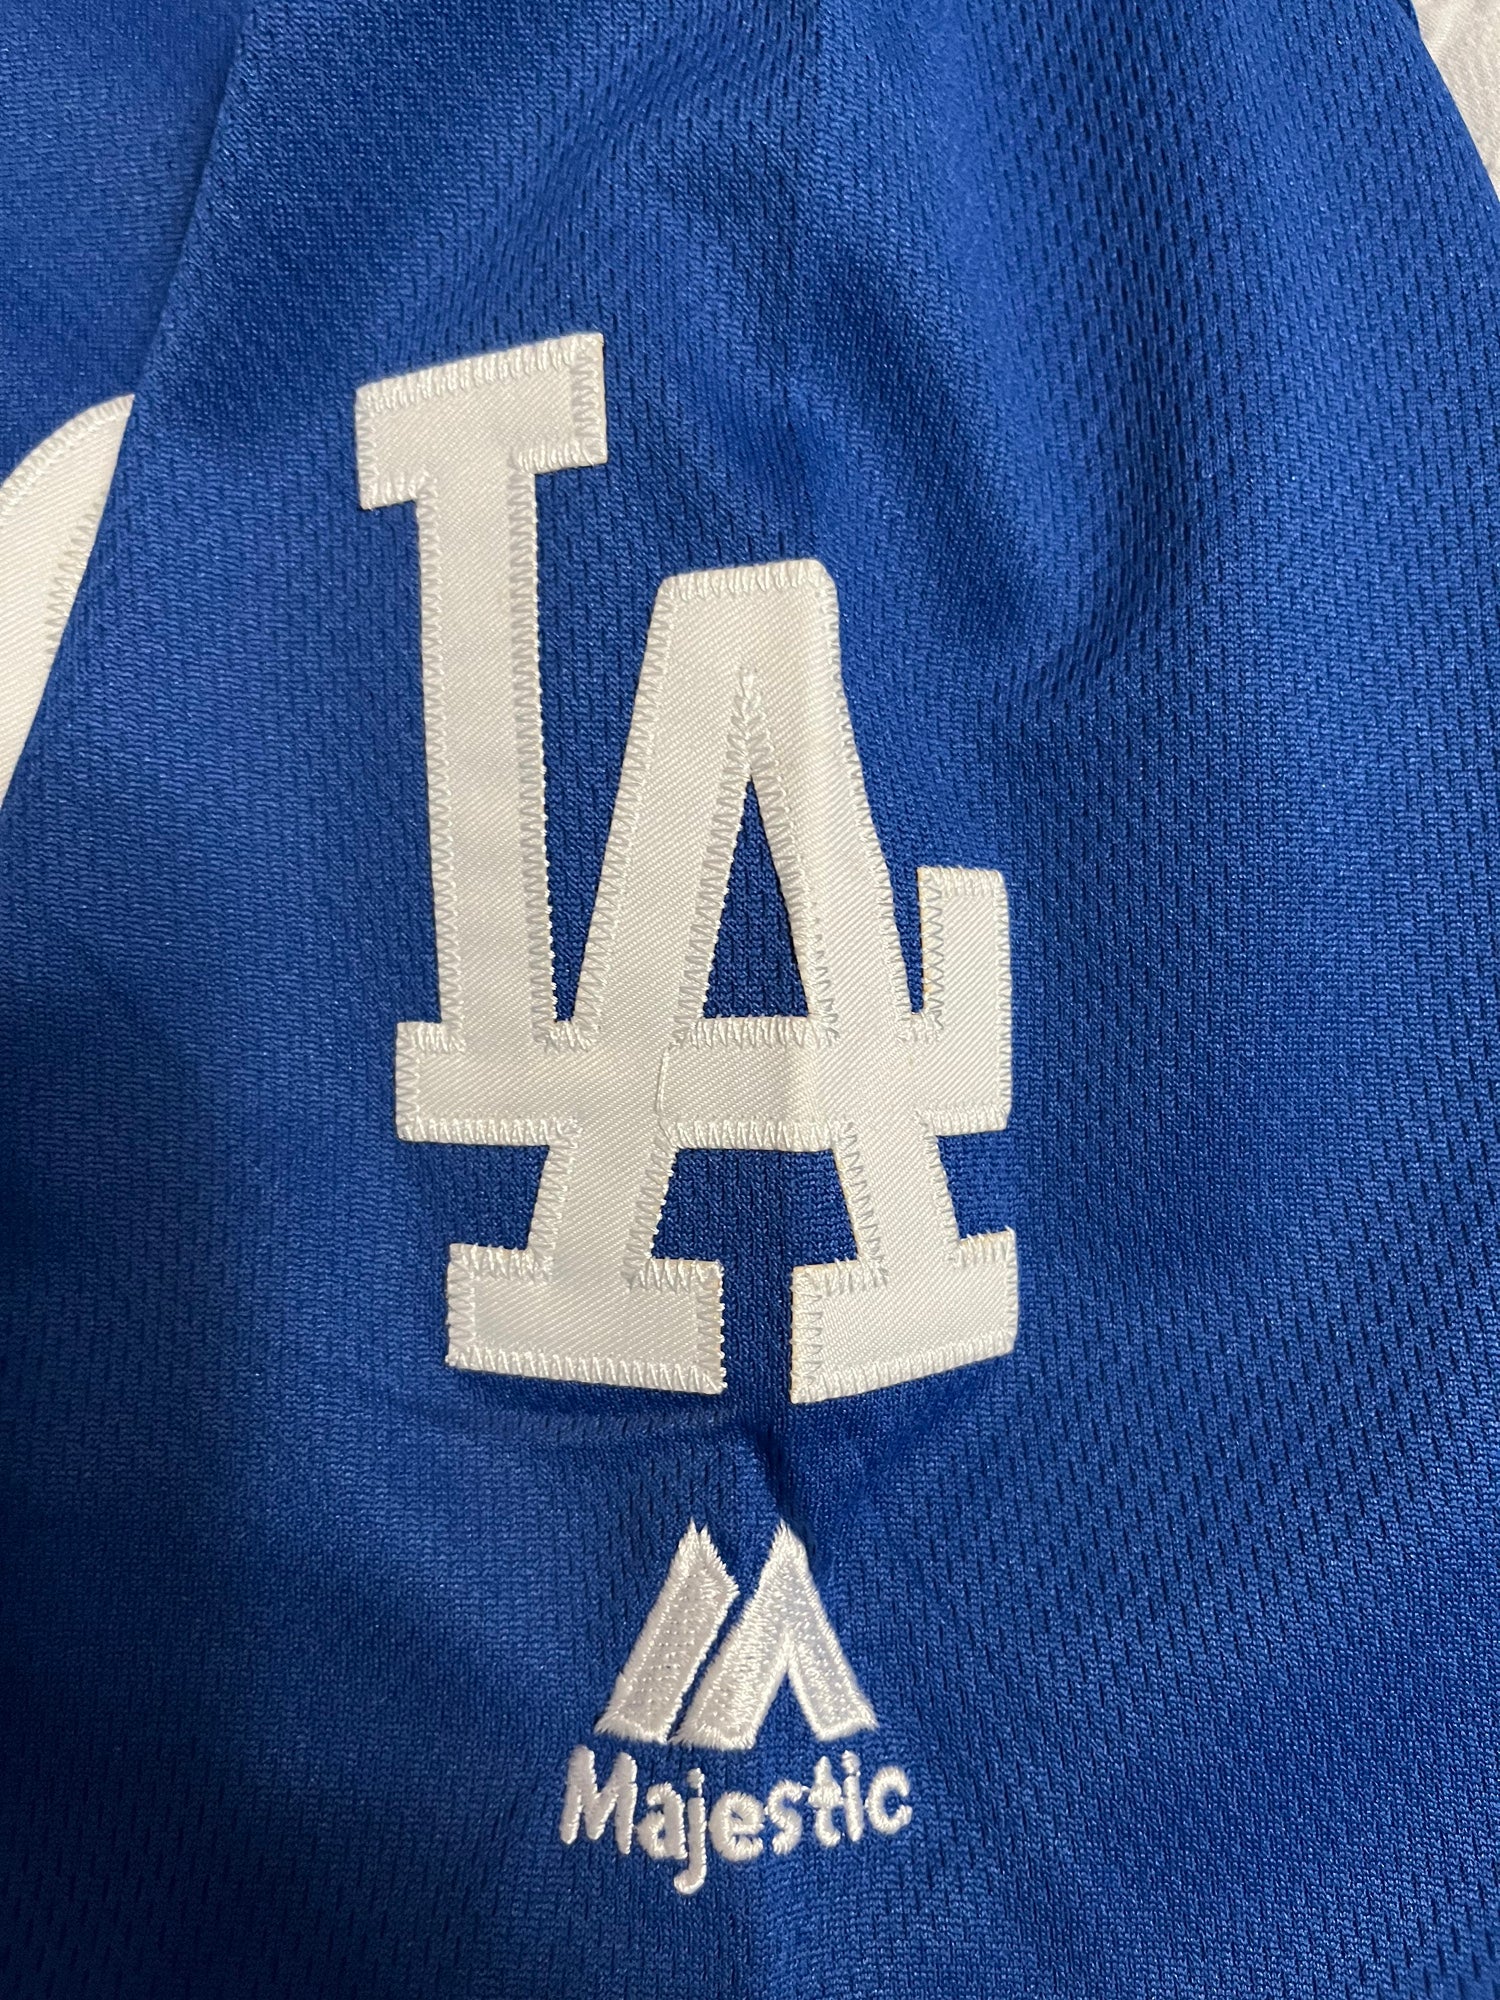 Los Angeles Dodgers Jersey Corey Seager WS MVP Majestic Flex Base Size 44